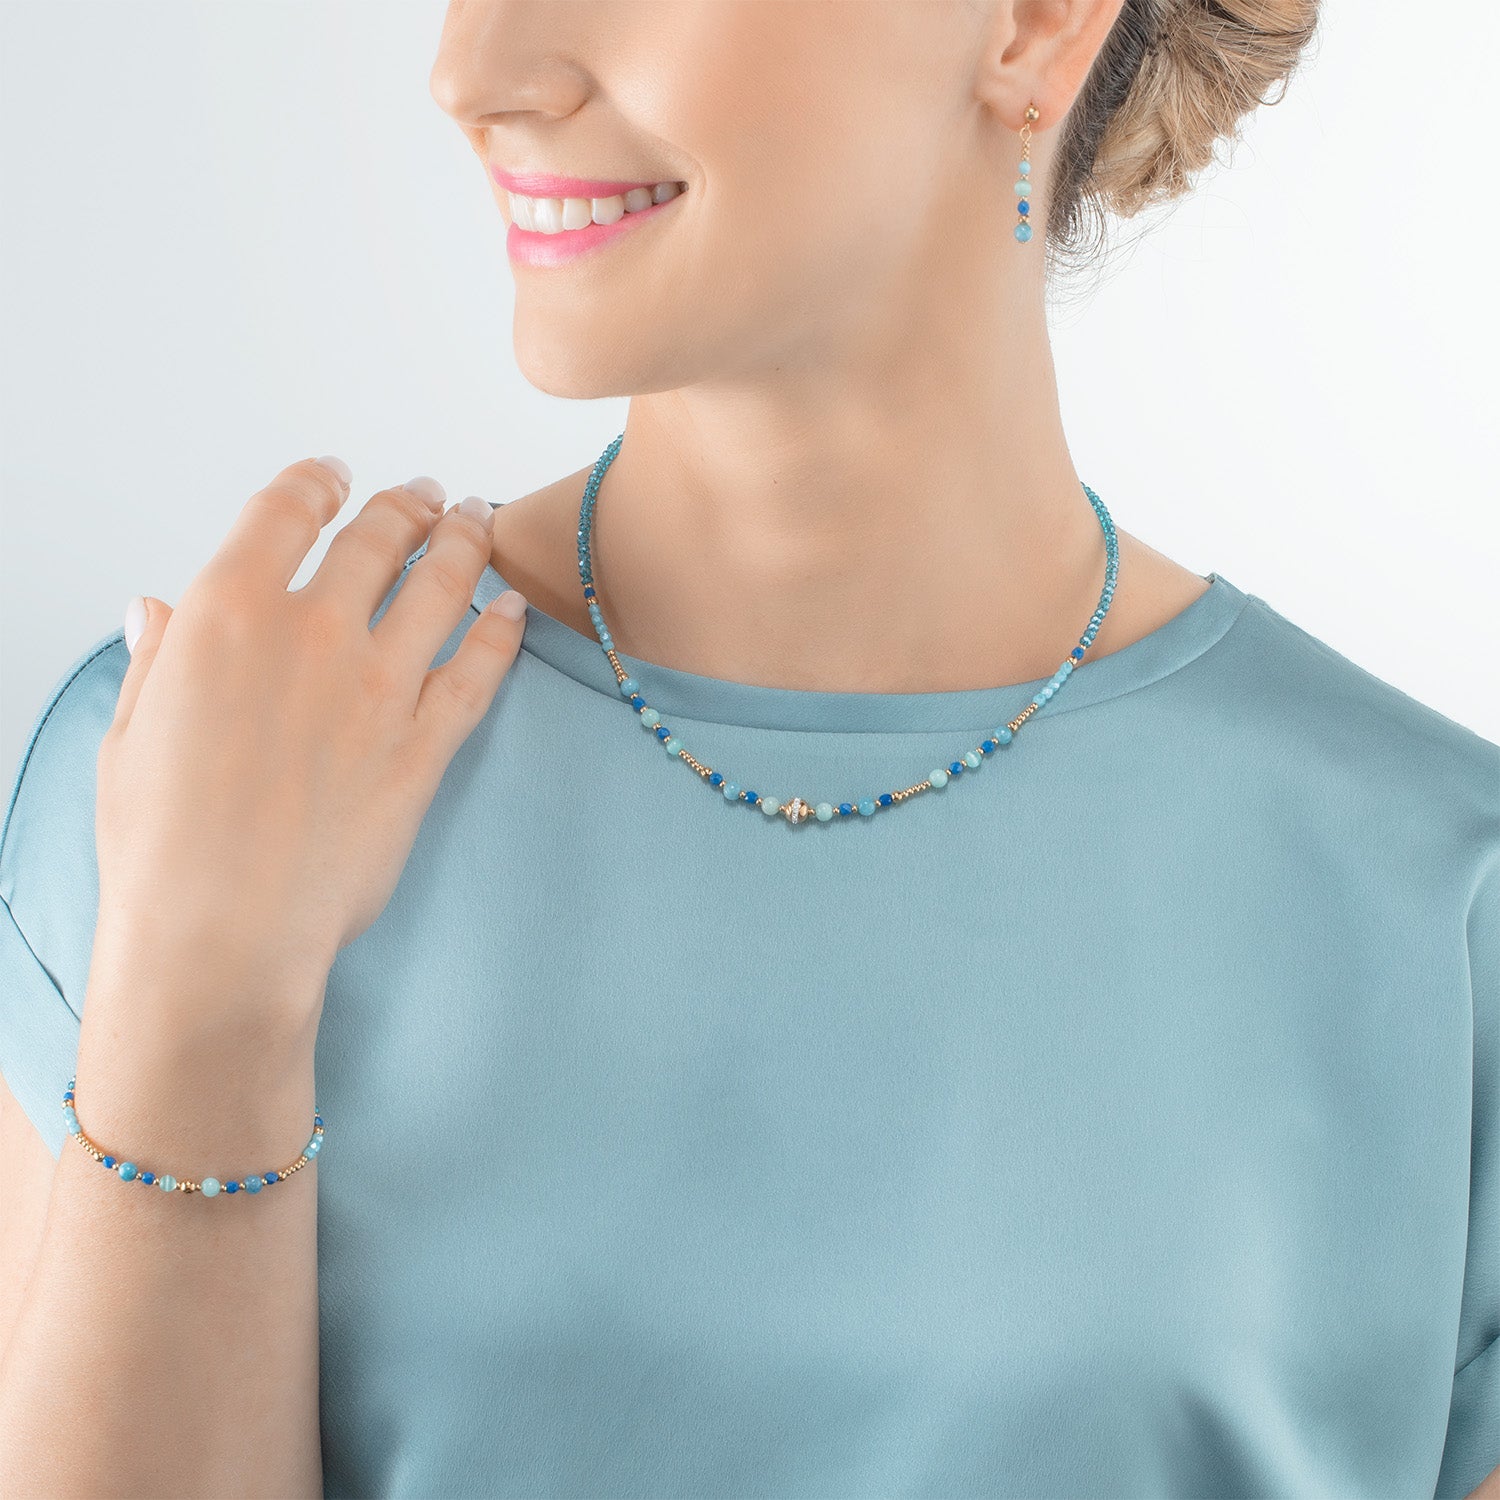 Princess Spheres bracelet turquoise